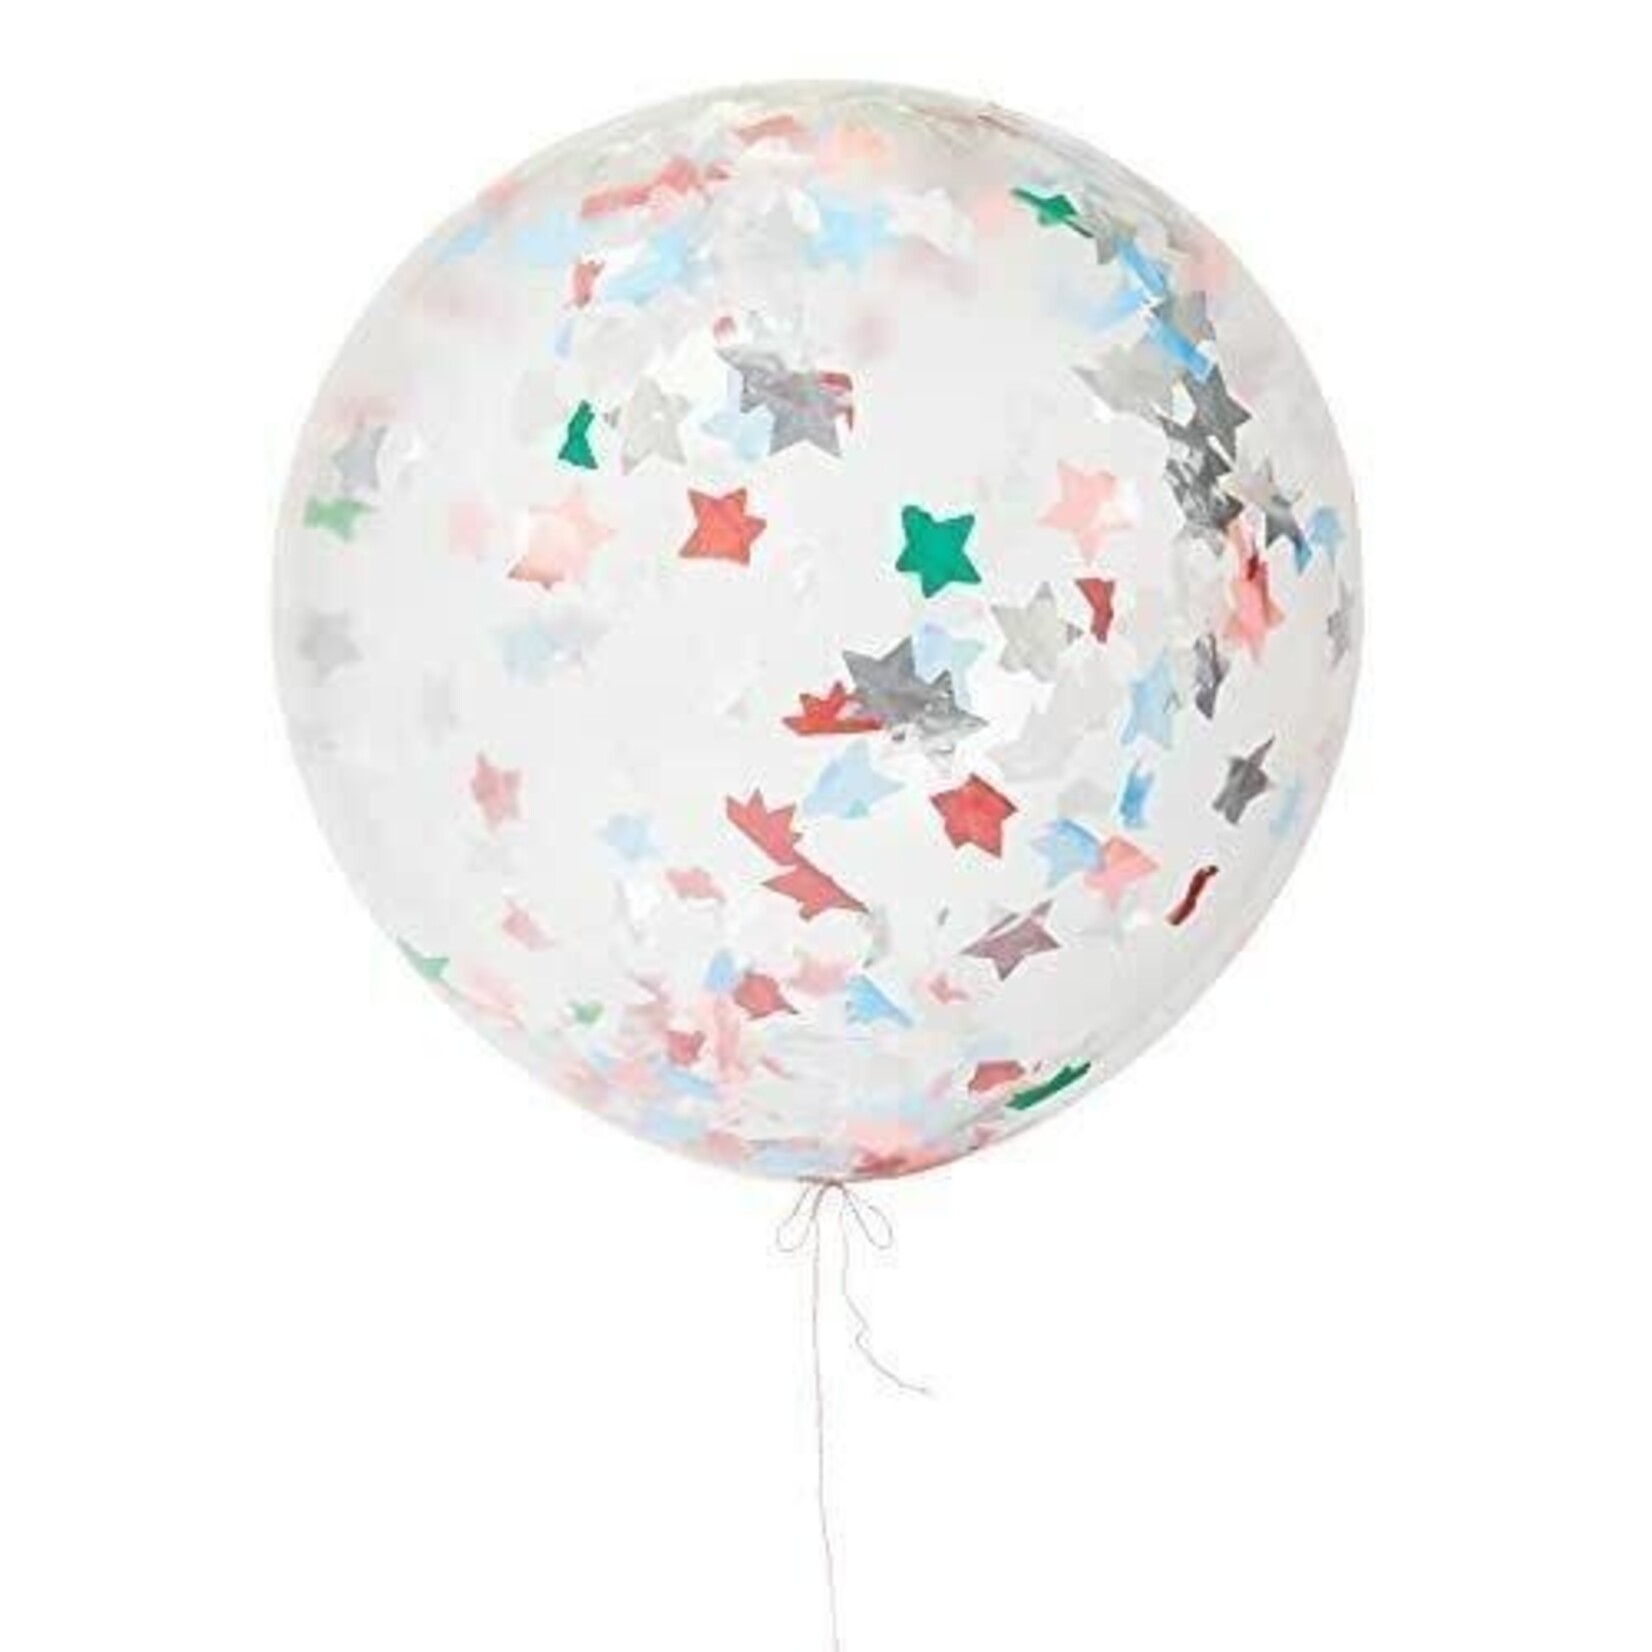 Meri Meri Giant Festive Star Confetti Balloon